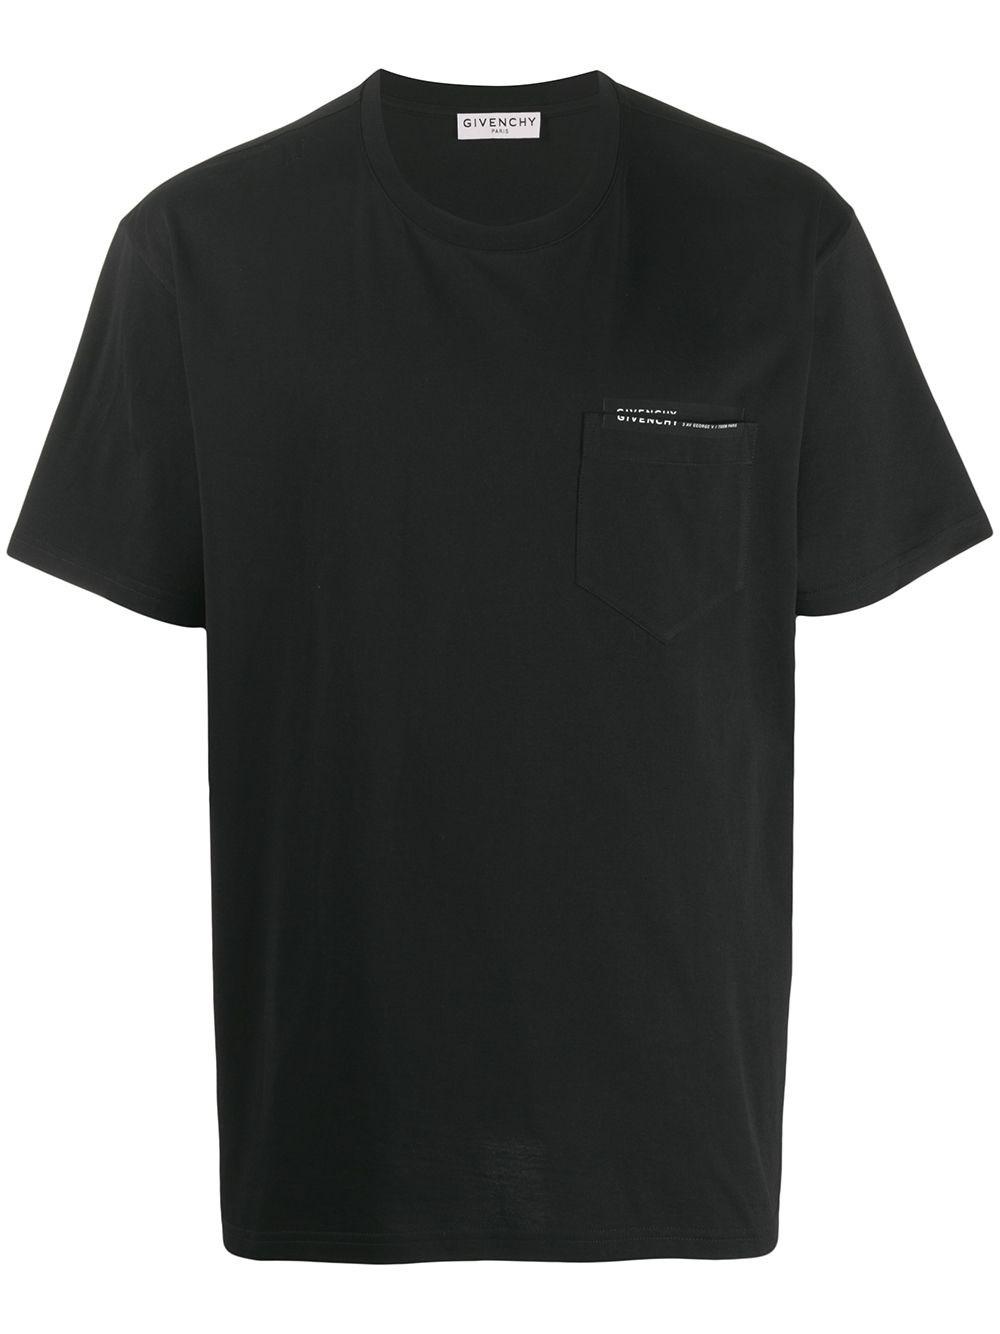 Givenchy Cotton Pocket T-shirt in Black for Men - Lyst